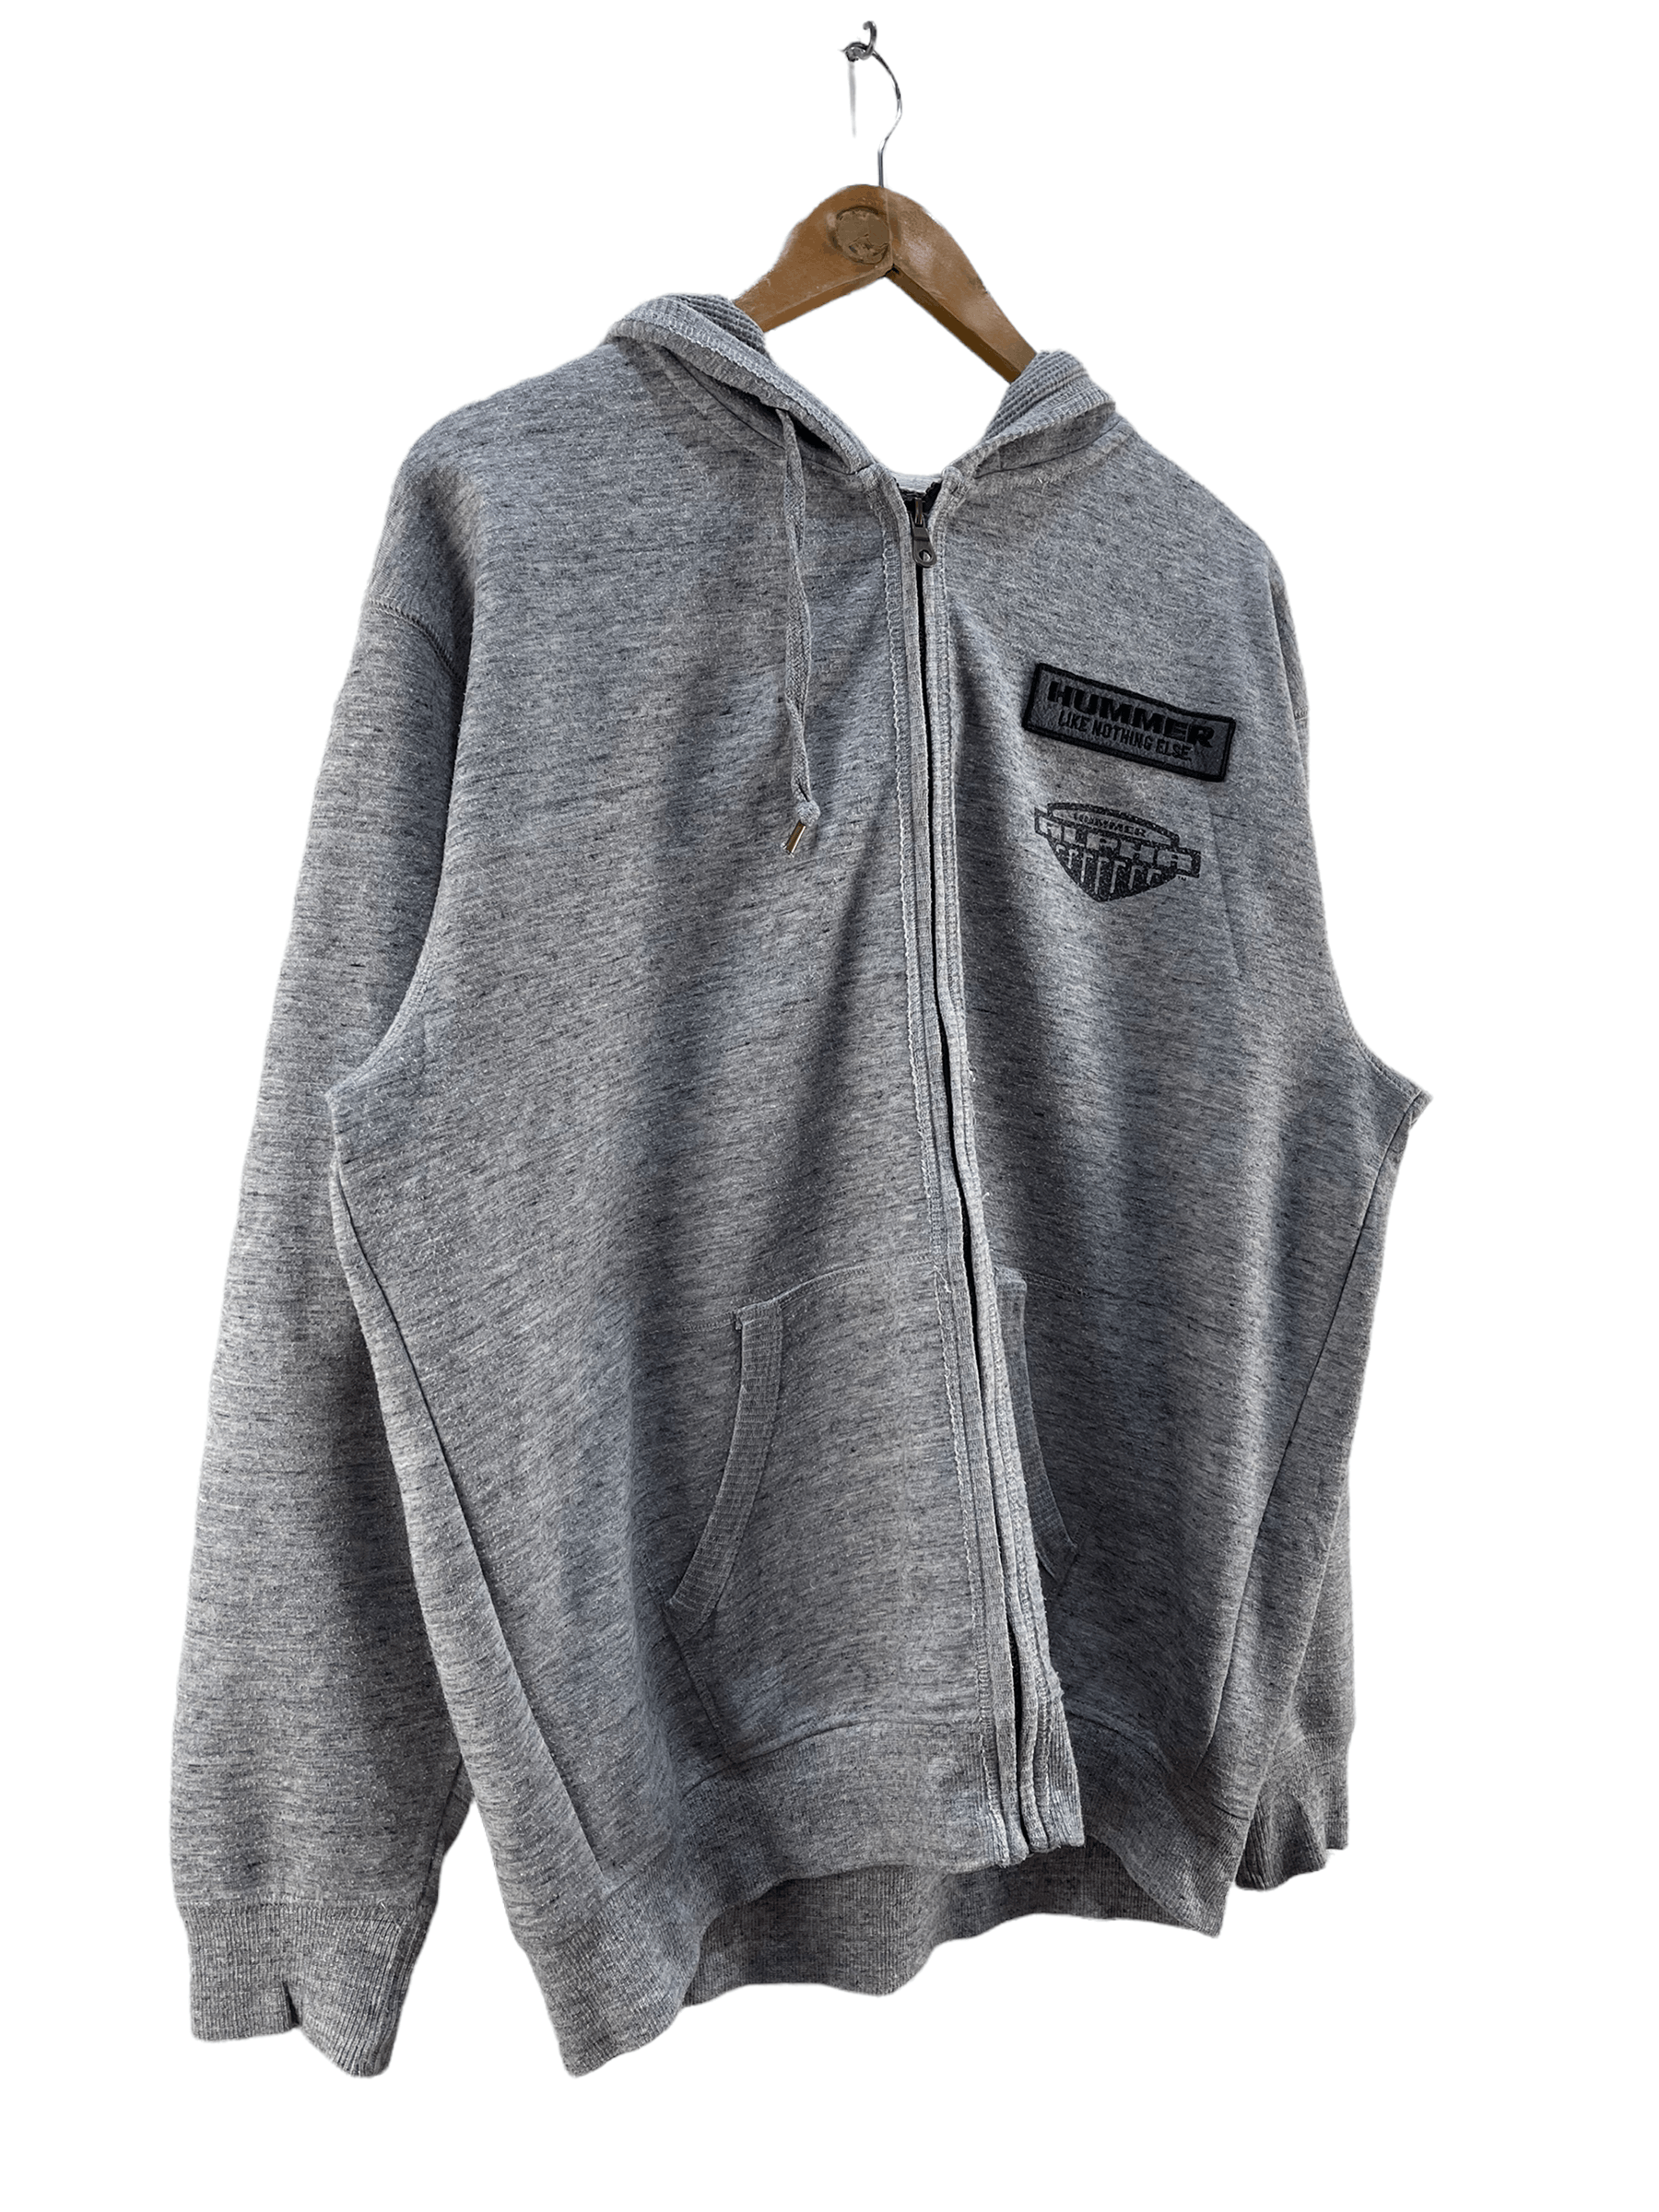 Japanese Brand Hummer Hoodies Sweater Jacket Size US L / EU 52-54 / 3 - 4 Thumbnail